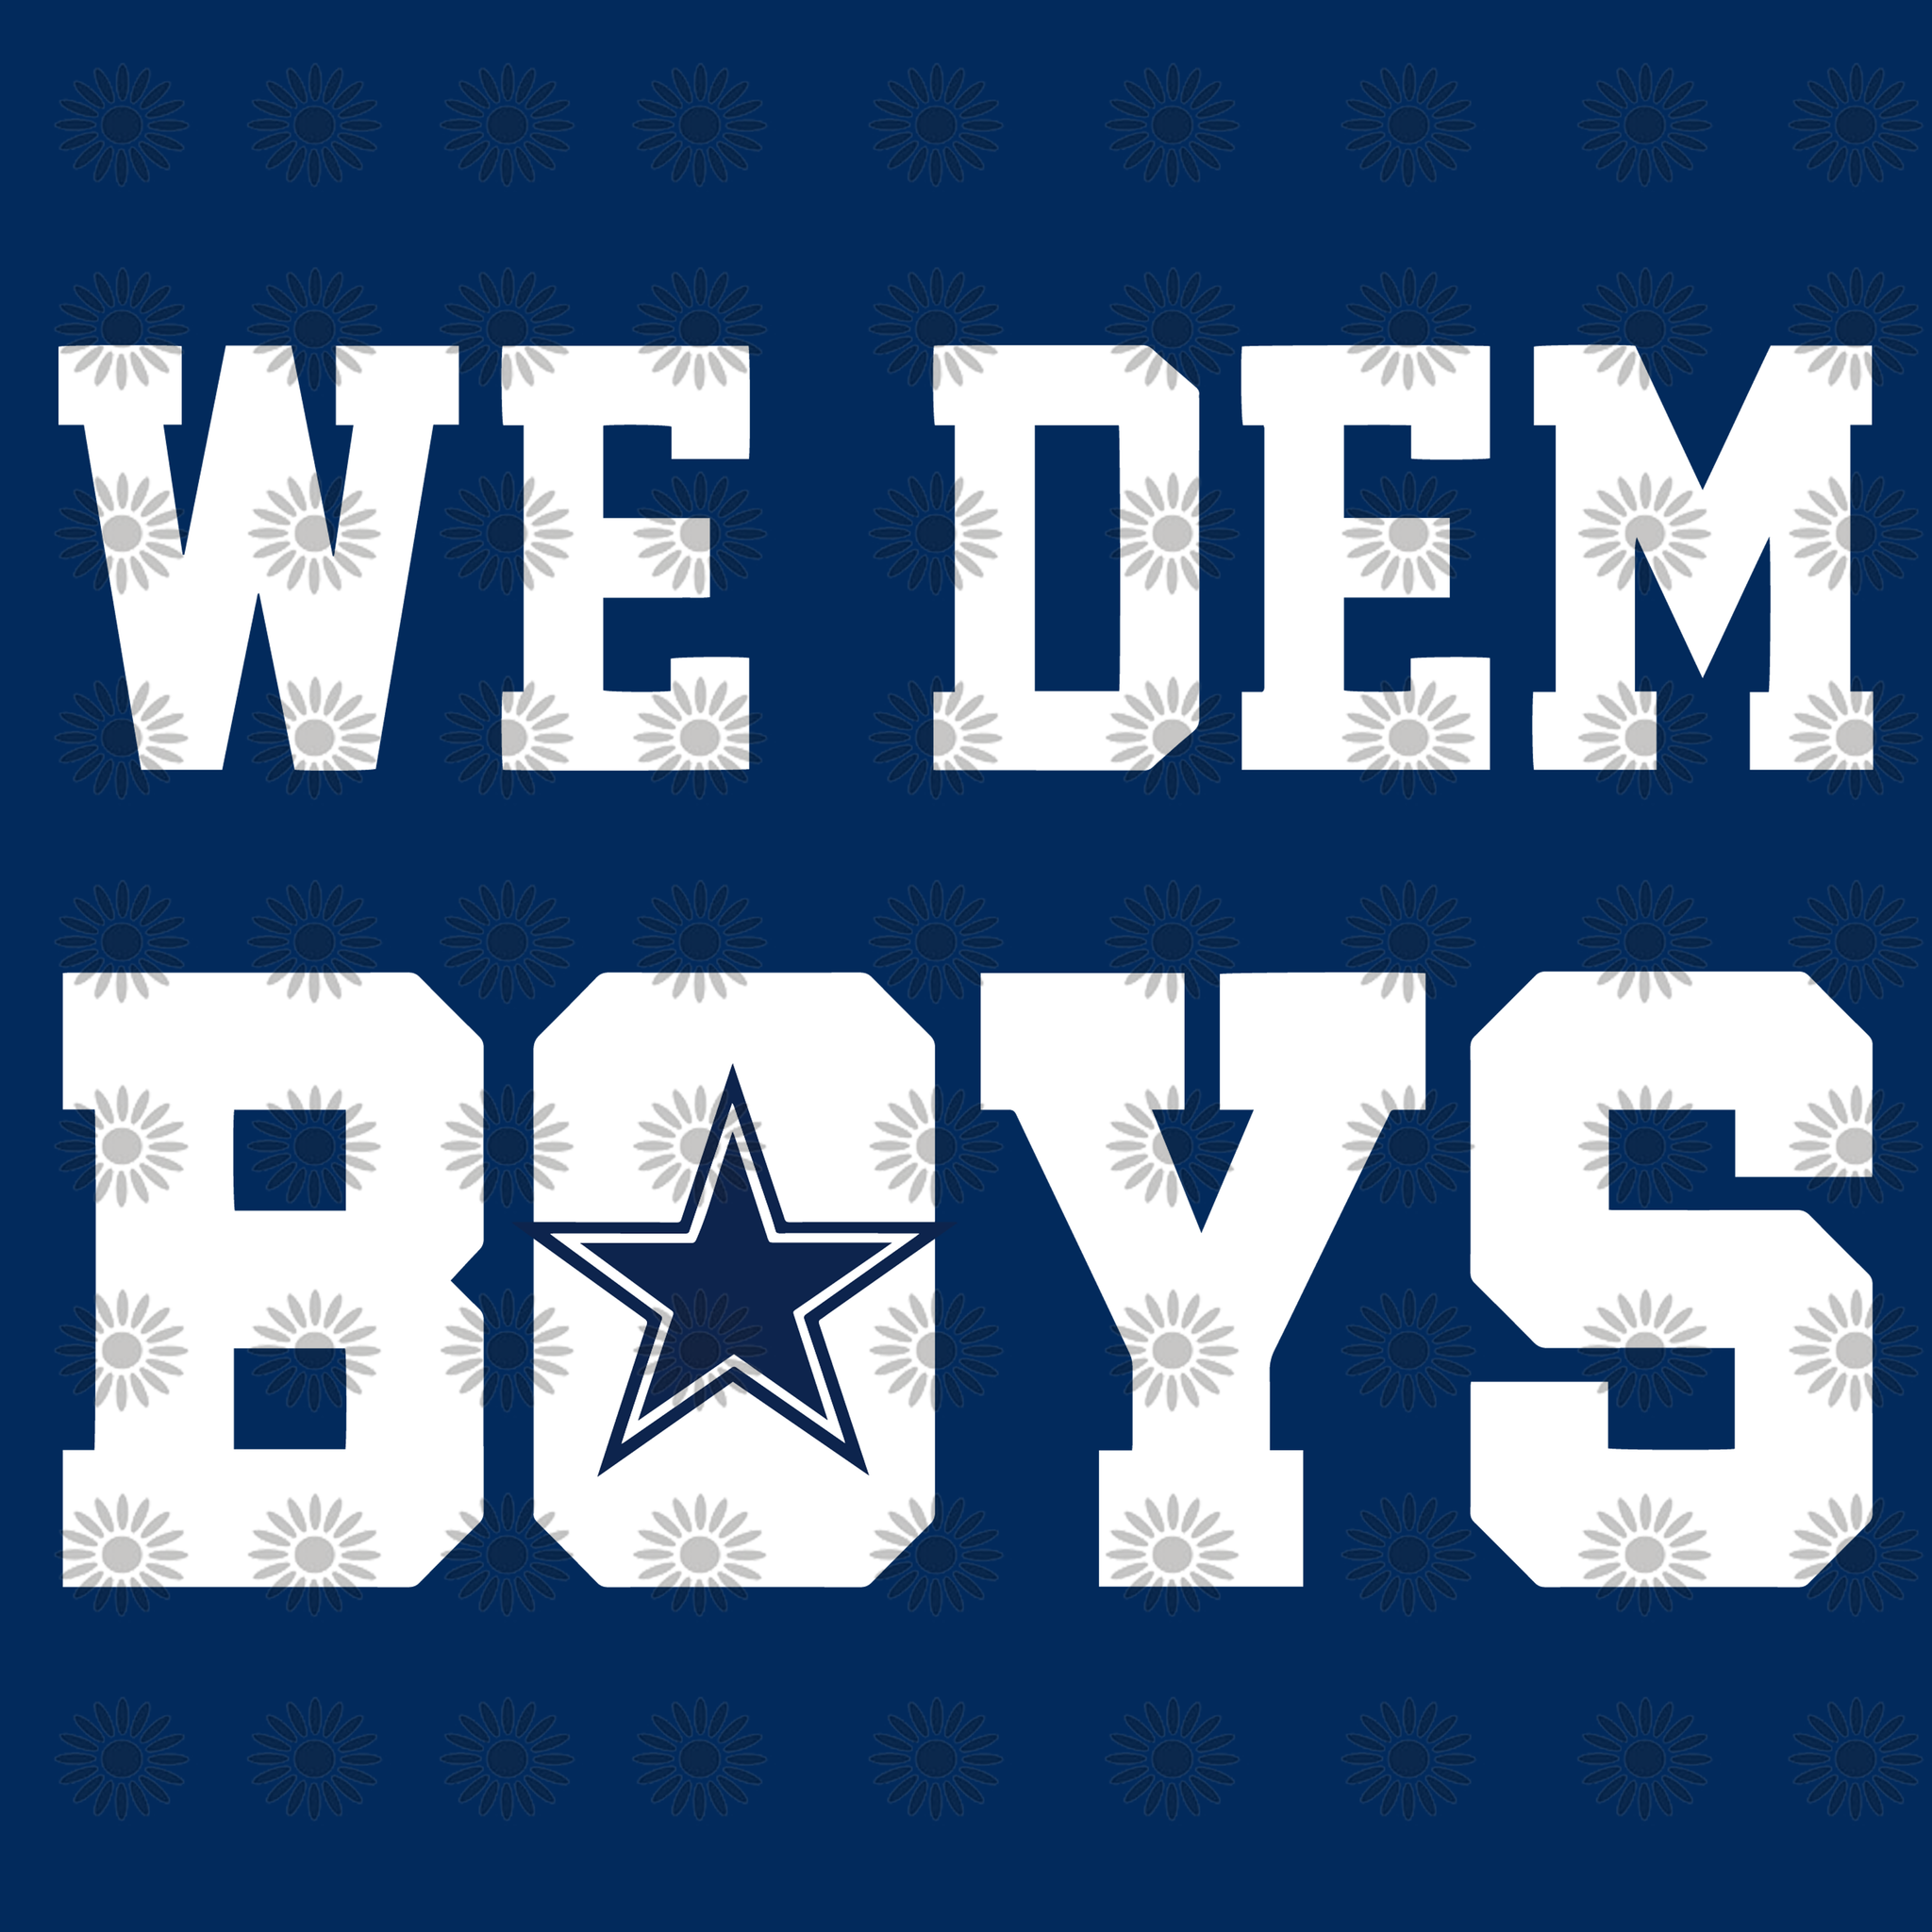 We Dem Boys, Dallas Cowboys svg, Football svg, Dallas Cowboys logo, Dallas Cowboys, skull Dallas Cowboys file,Svg, png, dxf,eps file for Cricut, Silhouette